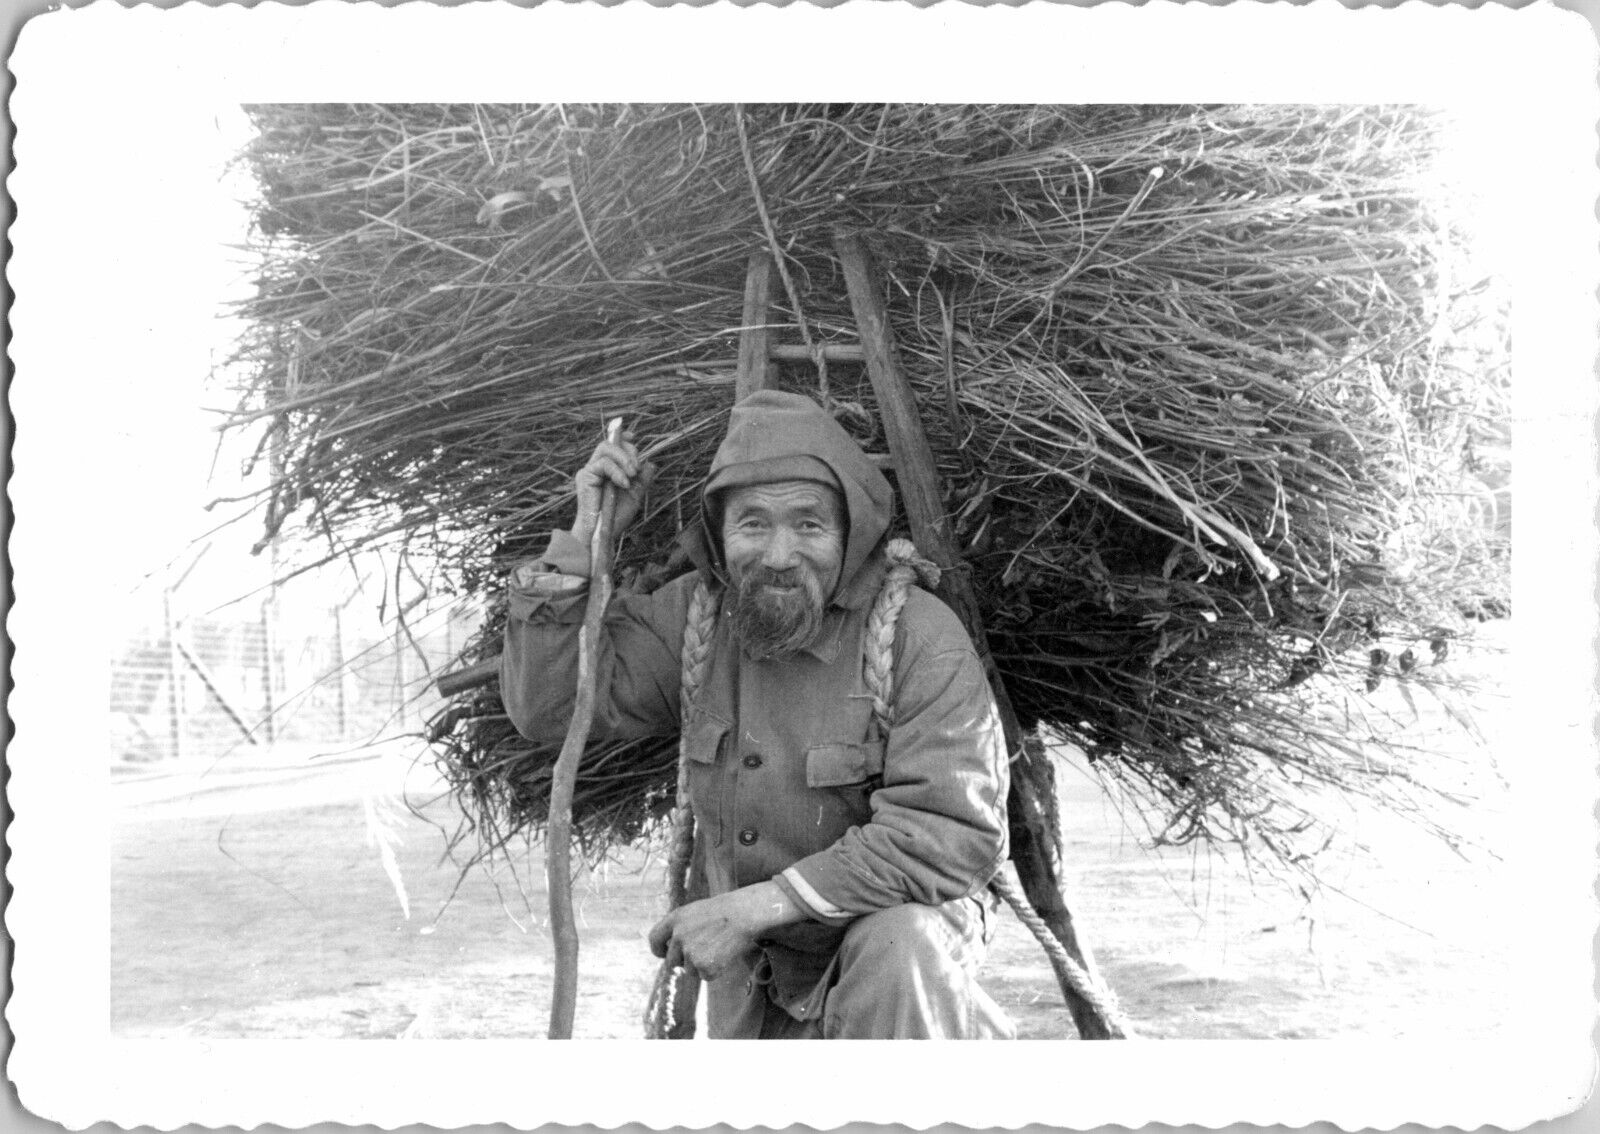 Man Labor Peasant A-Frame South Korea Photo 1950s Korean War Vintage Snapshot